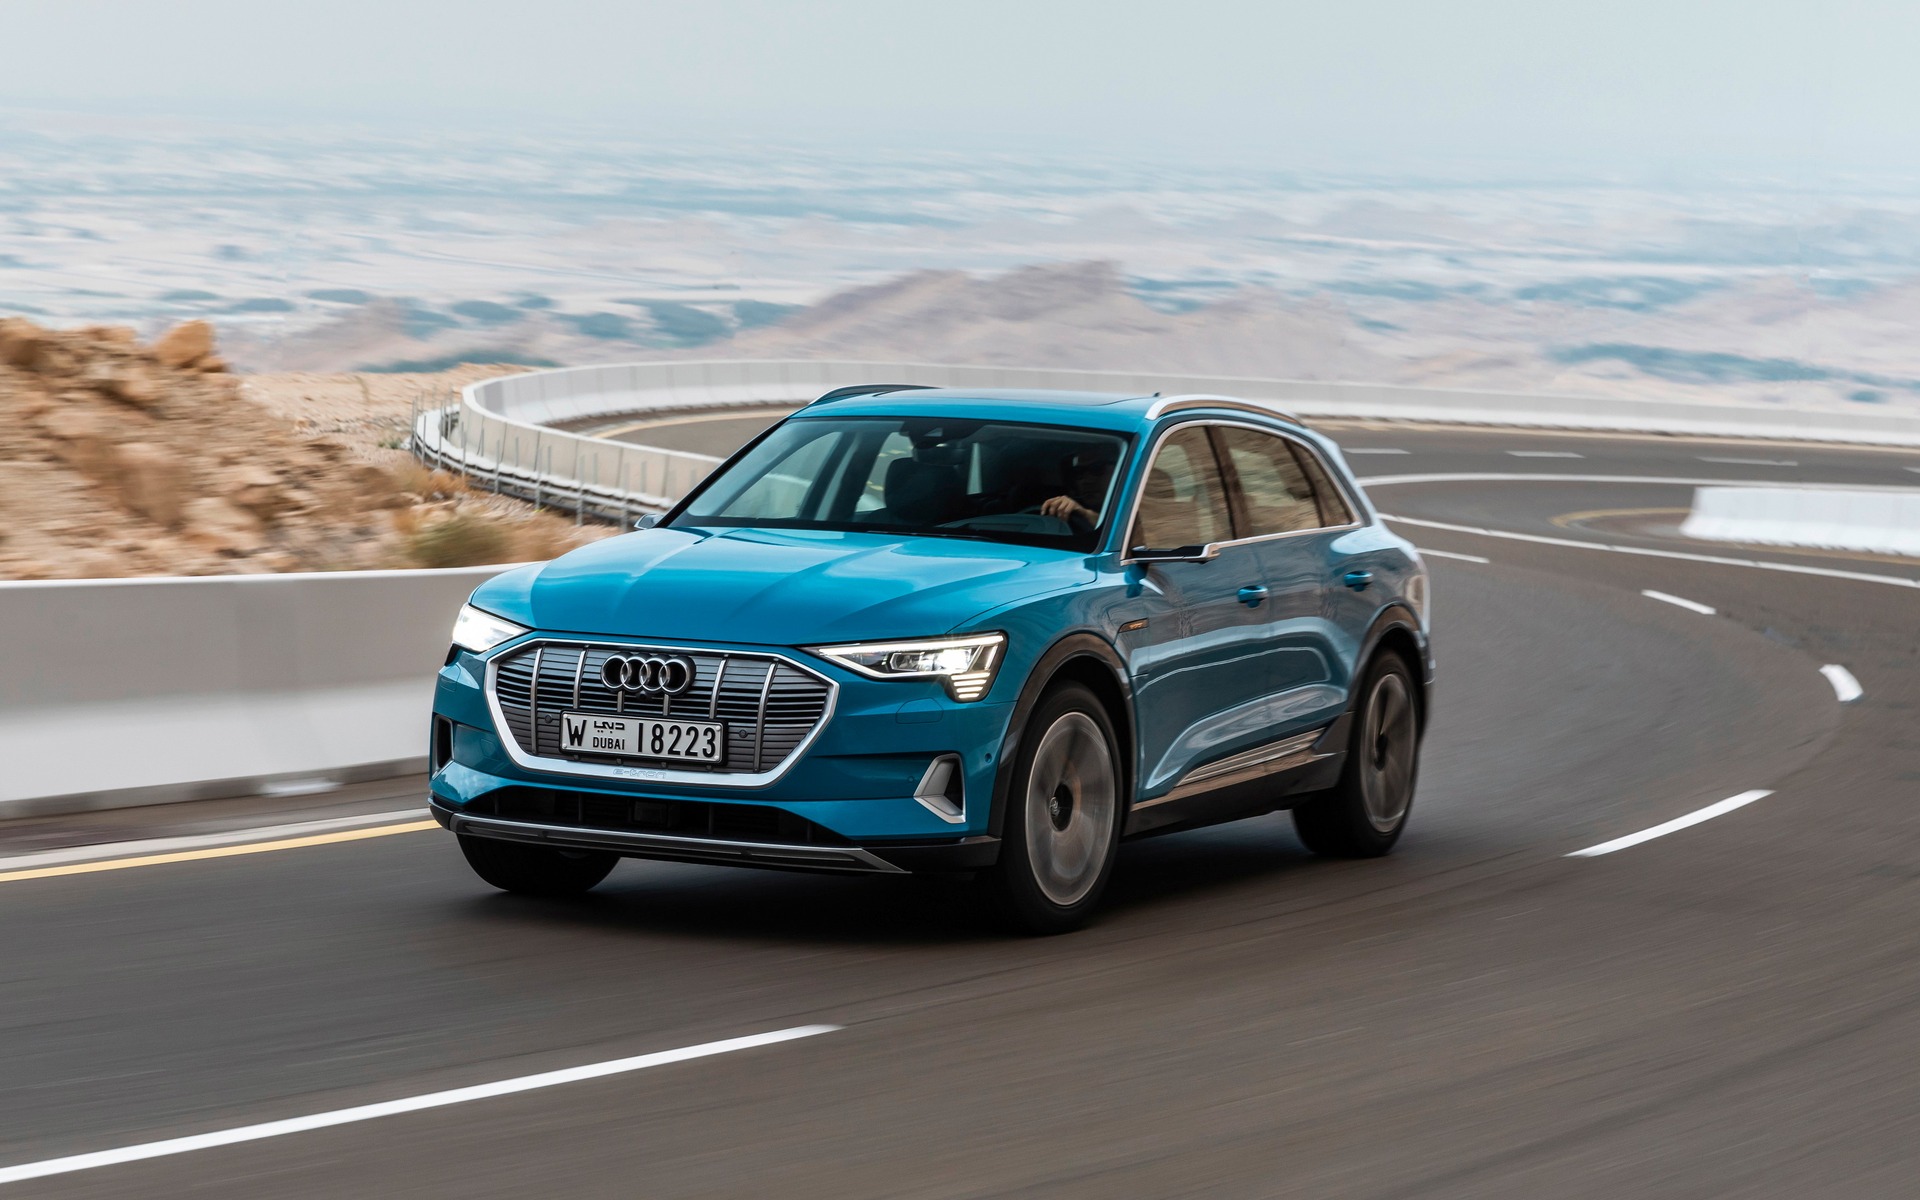 2019 Audi e-tron quattro: Electric is the Forward - The Car Guide